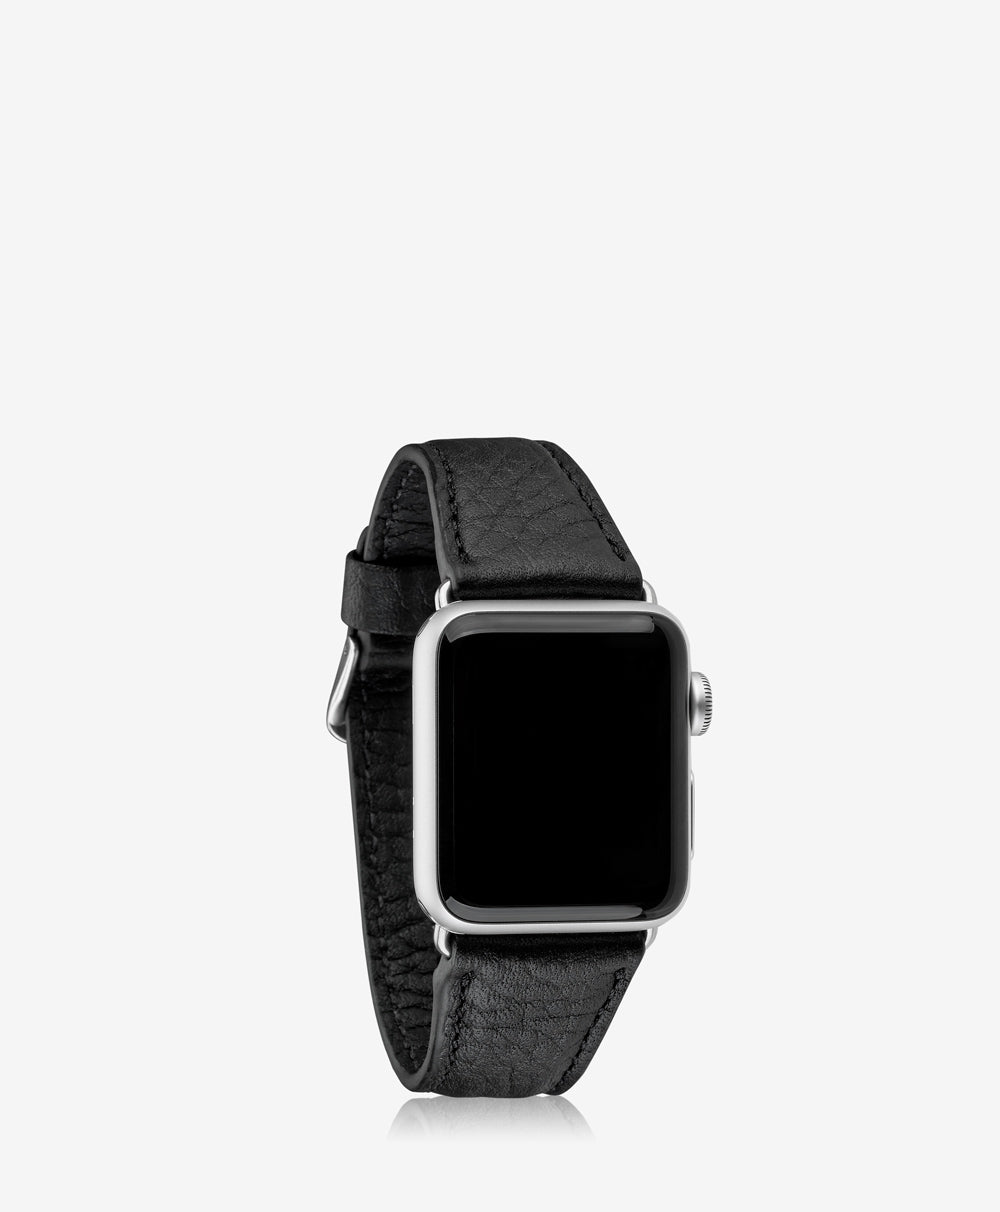 38mm Apple Watch Band | Black Pebble Grain Leather